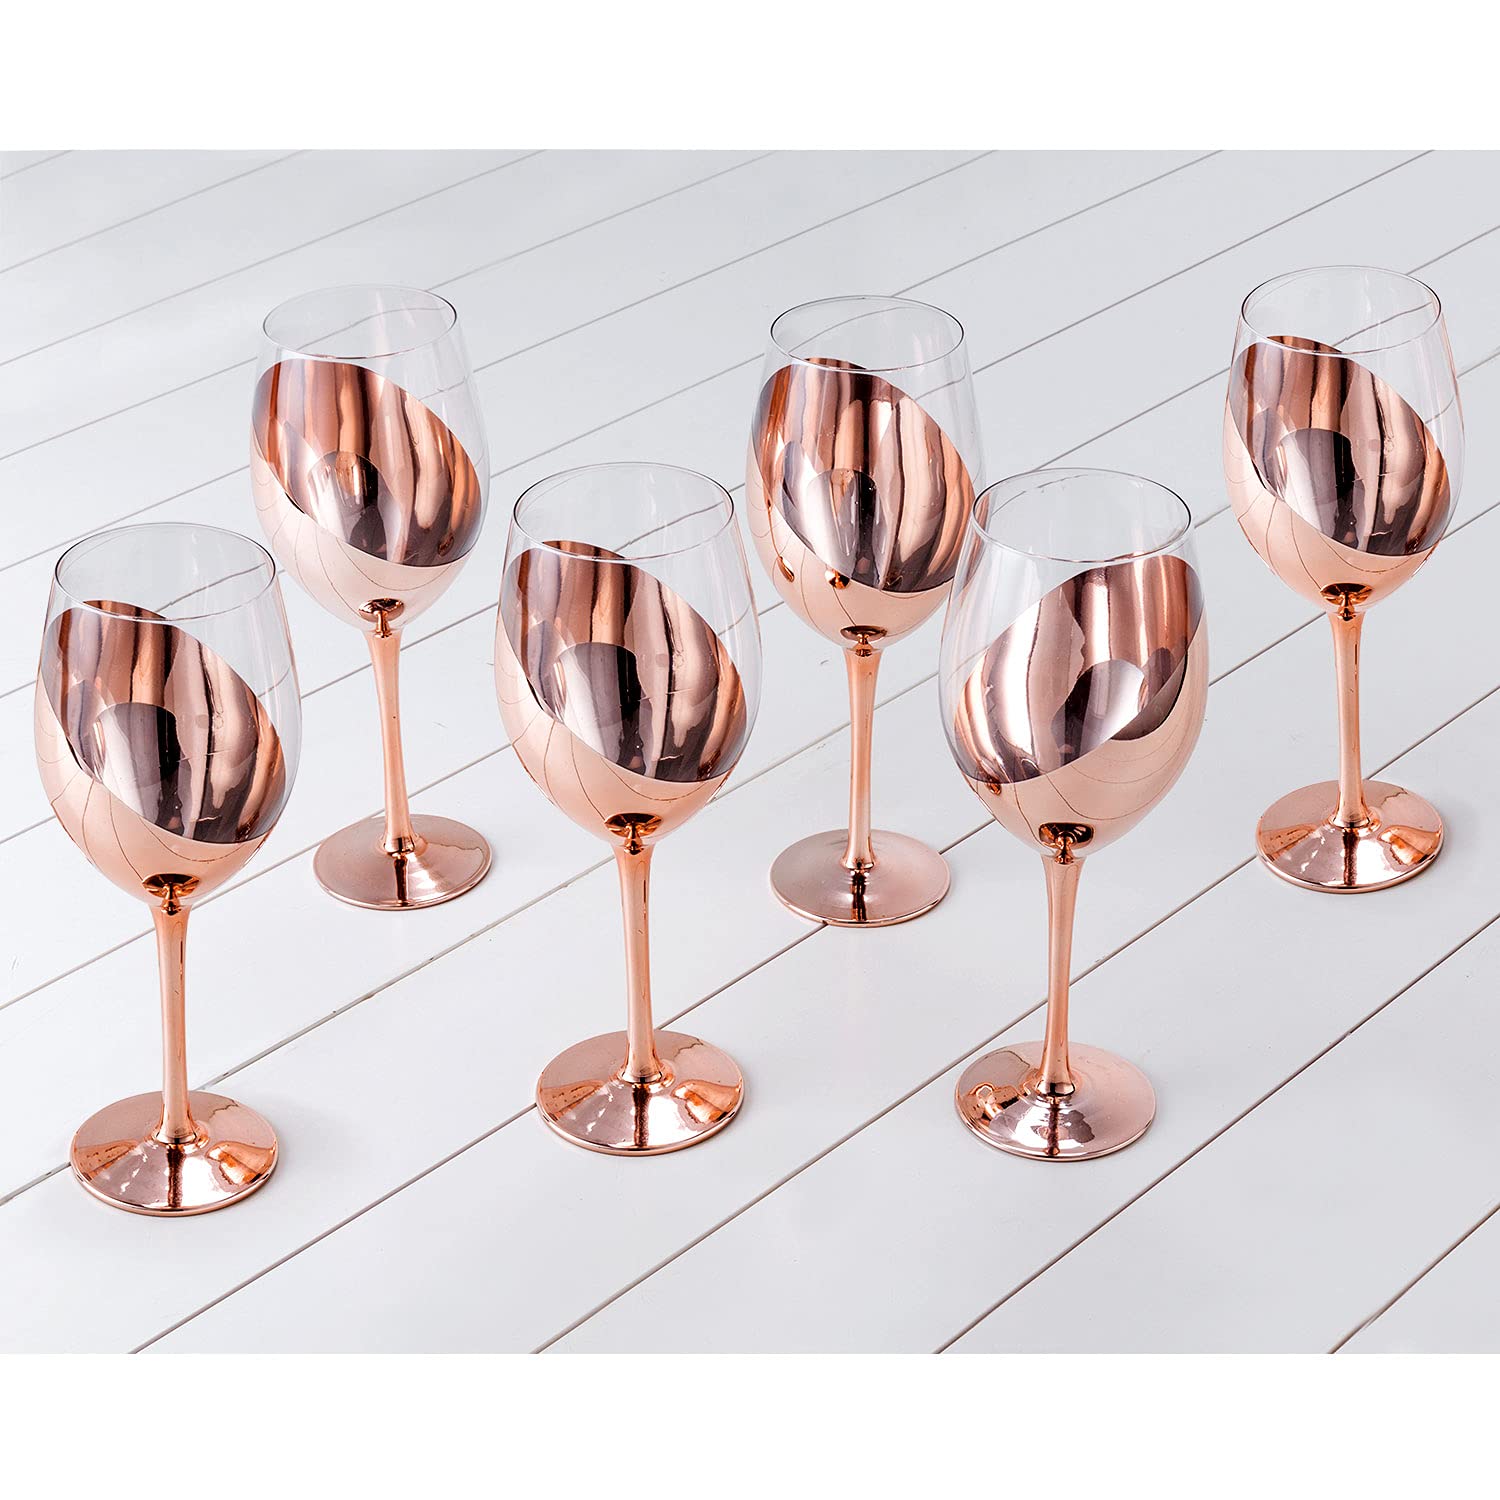 MyGift 14 oz Elegant Copper-Toned Stemmed Wine Glasses with Tilted Design, Dinner Party and Wedding Events Glassware - Set of 6